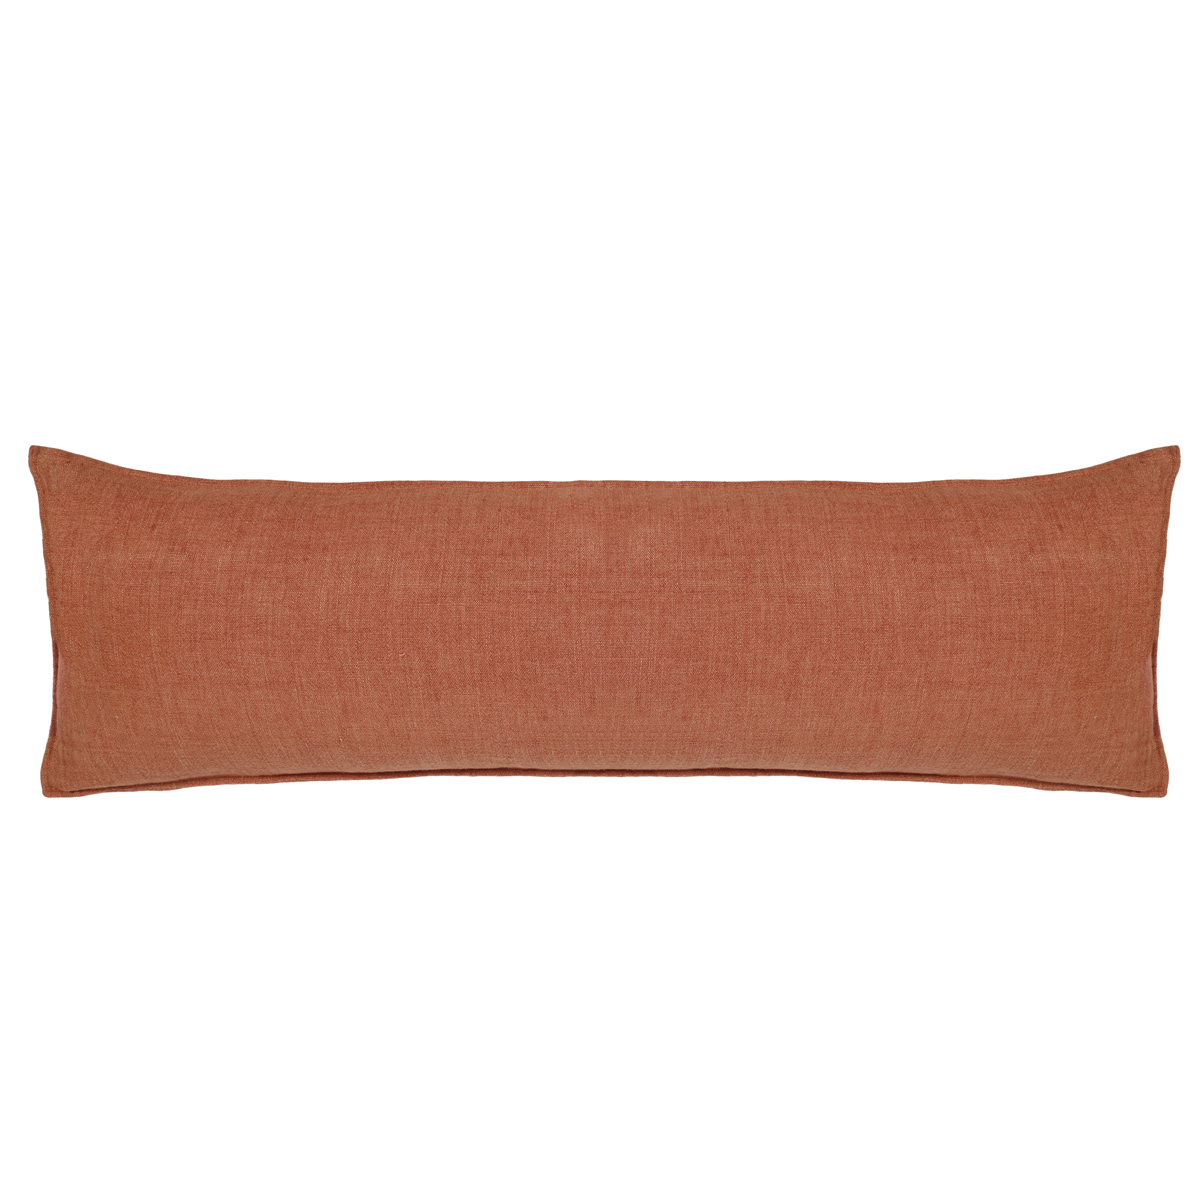 MONTAUK BLANKET - 7 Colors-body pillow-Pom Pom at Home